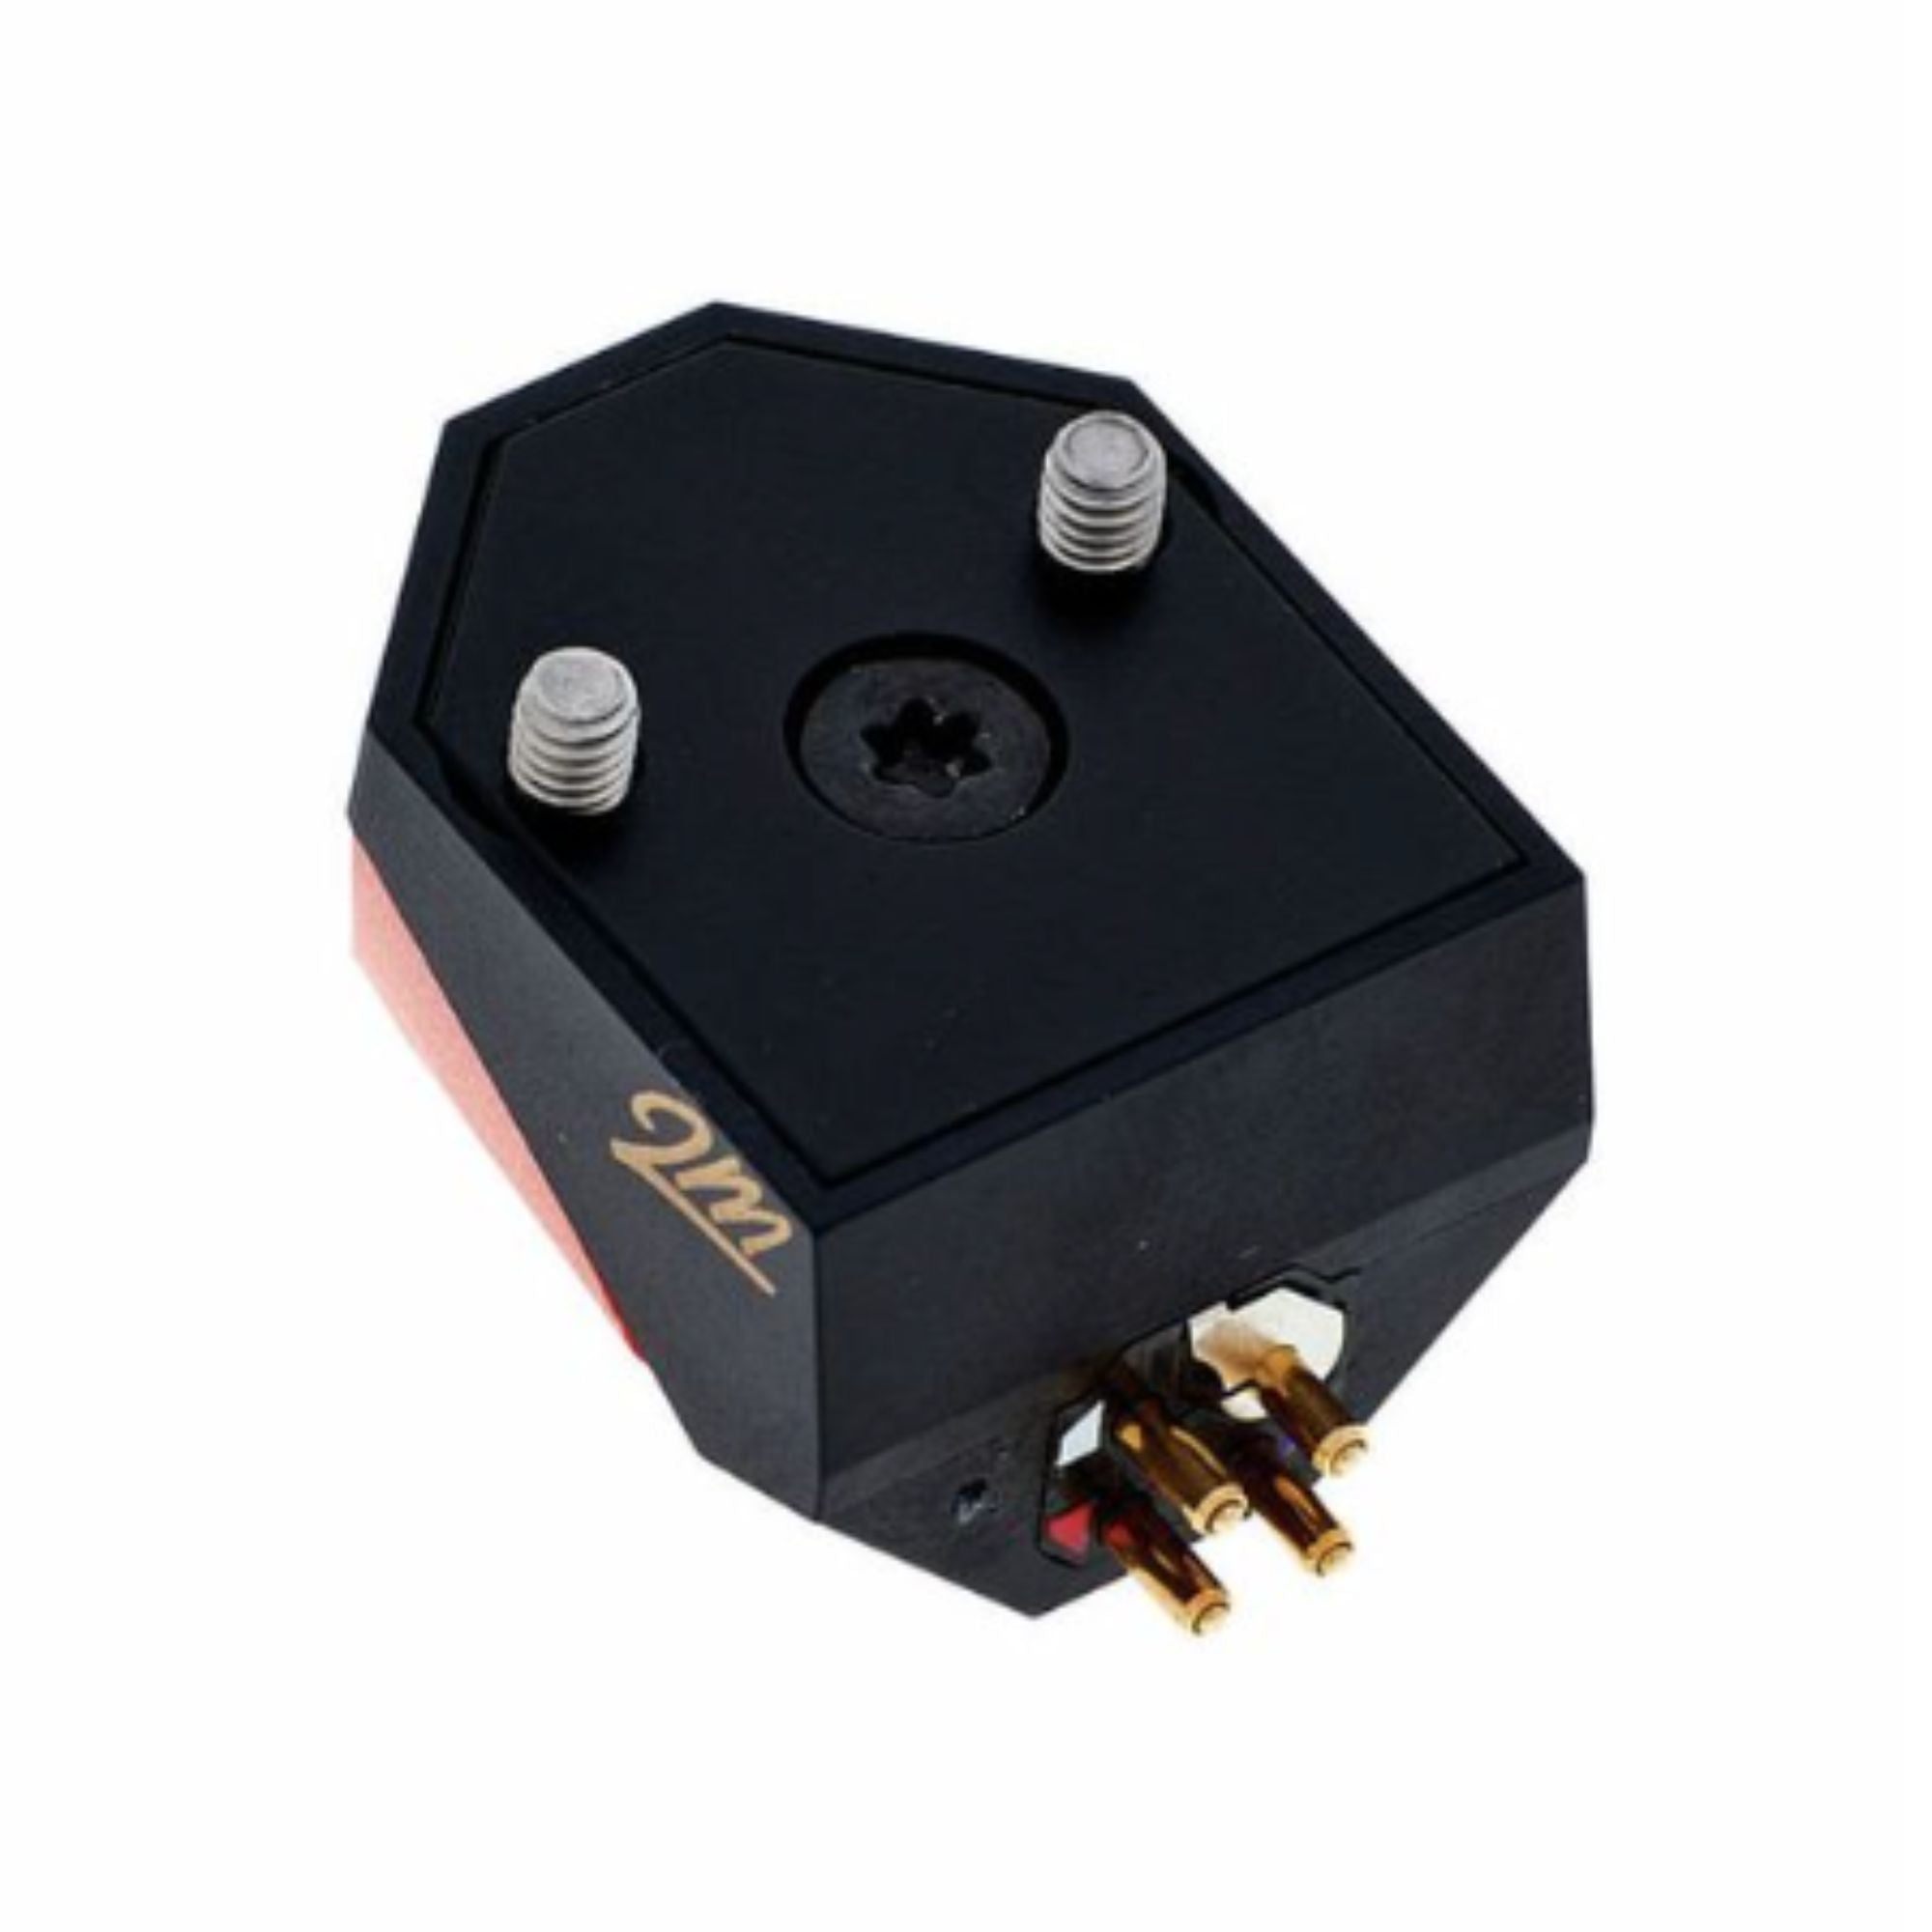 Ortofon 2M Bronze Verso - Moving Magnet Cartridge, Ortofon, Turntable Accessories - AVStore.in